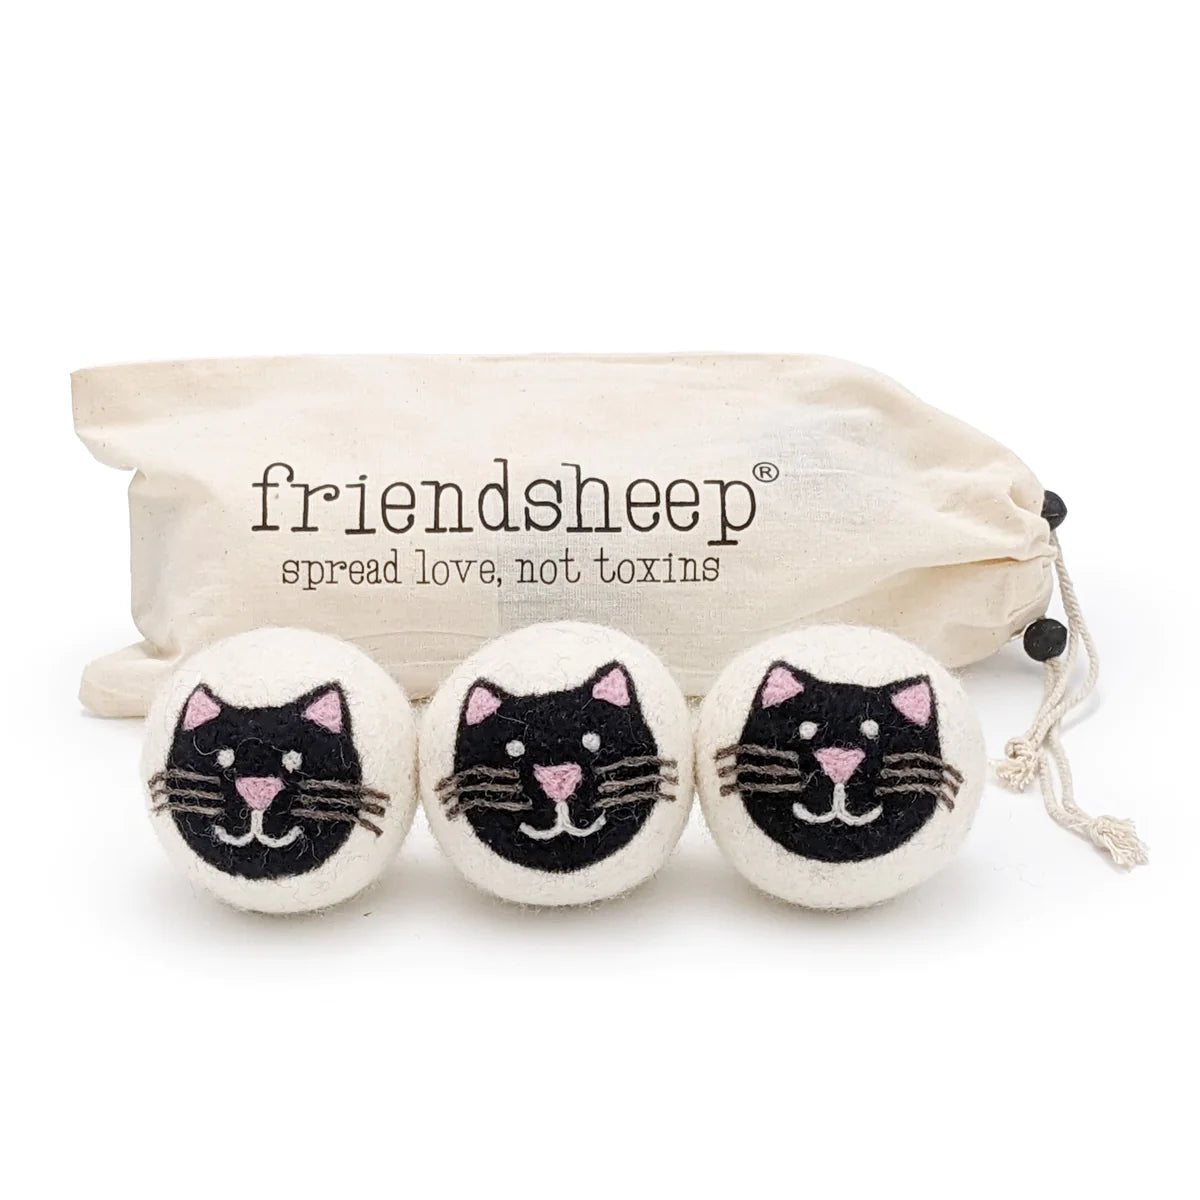 Friendsheep - Eco Dryer Ball Black Cats (Set of 3)